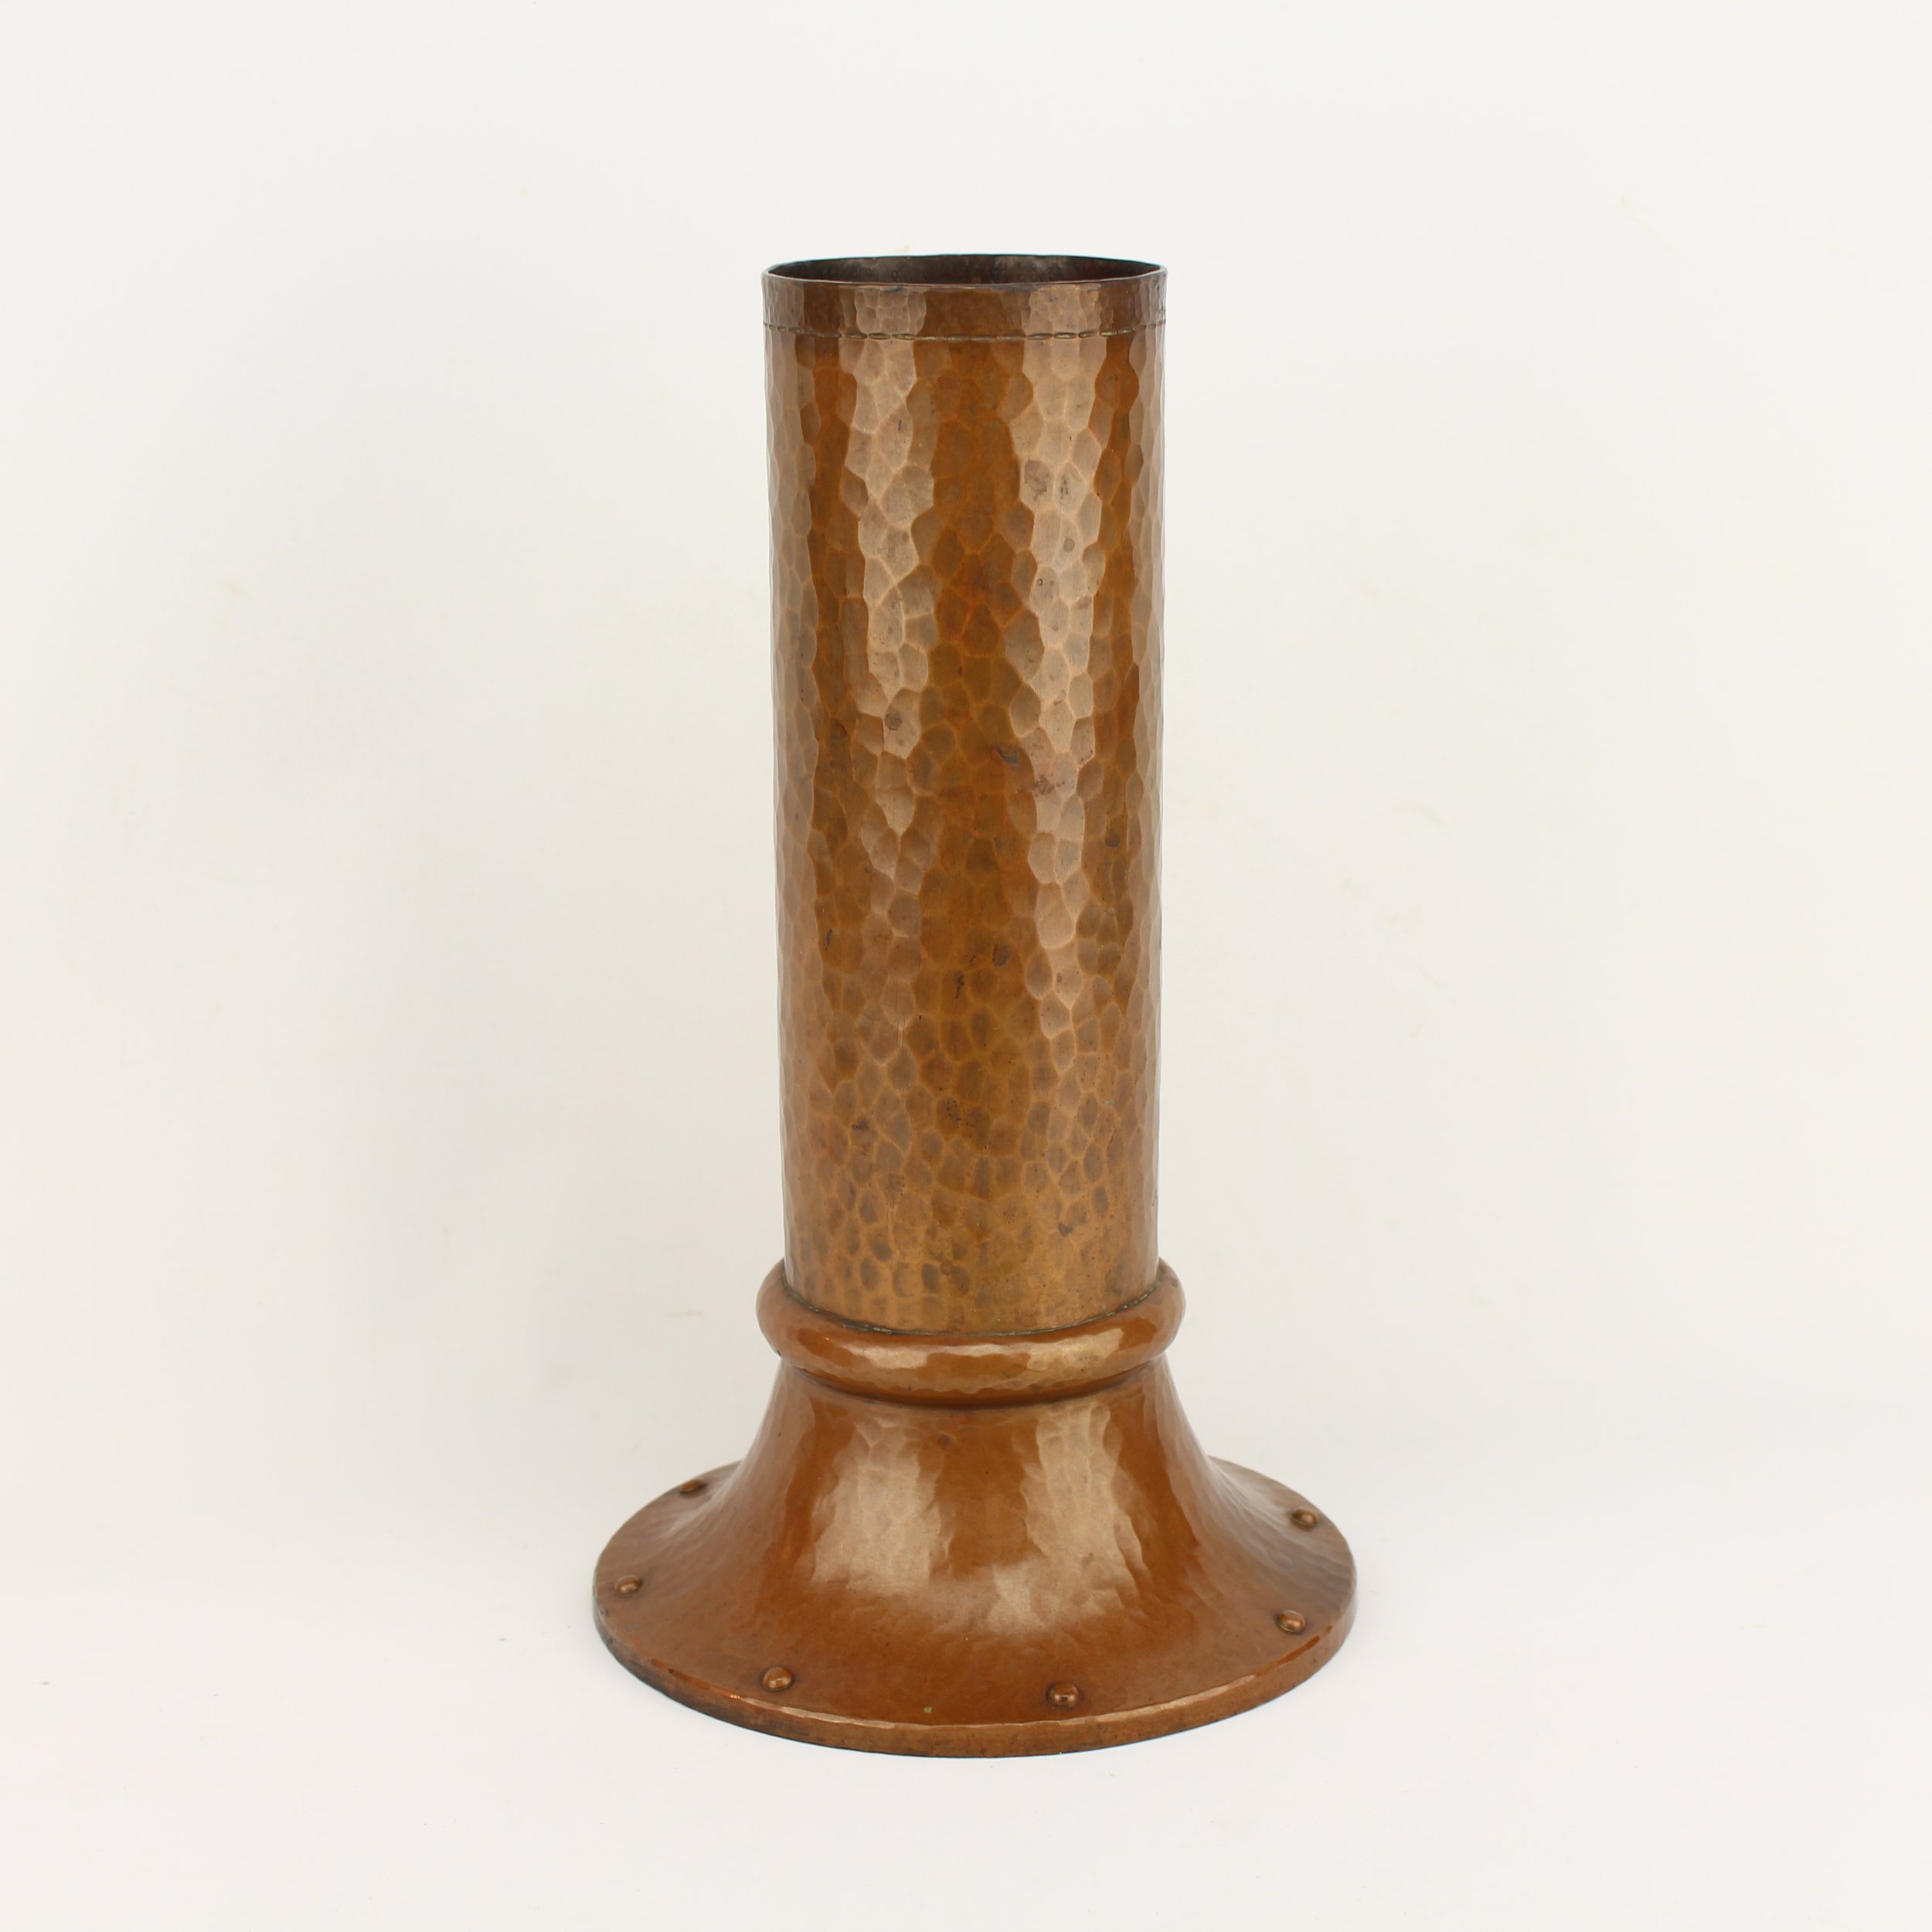 SOLD, Roycroft Tall Shaft Vase